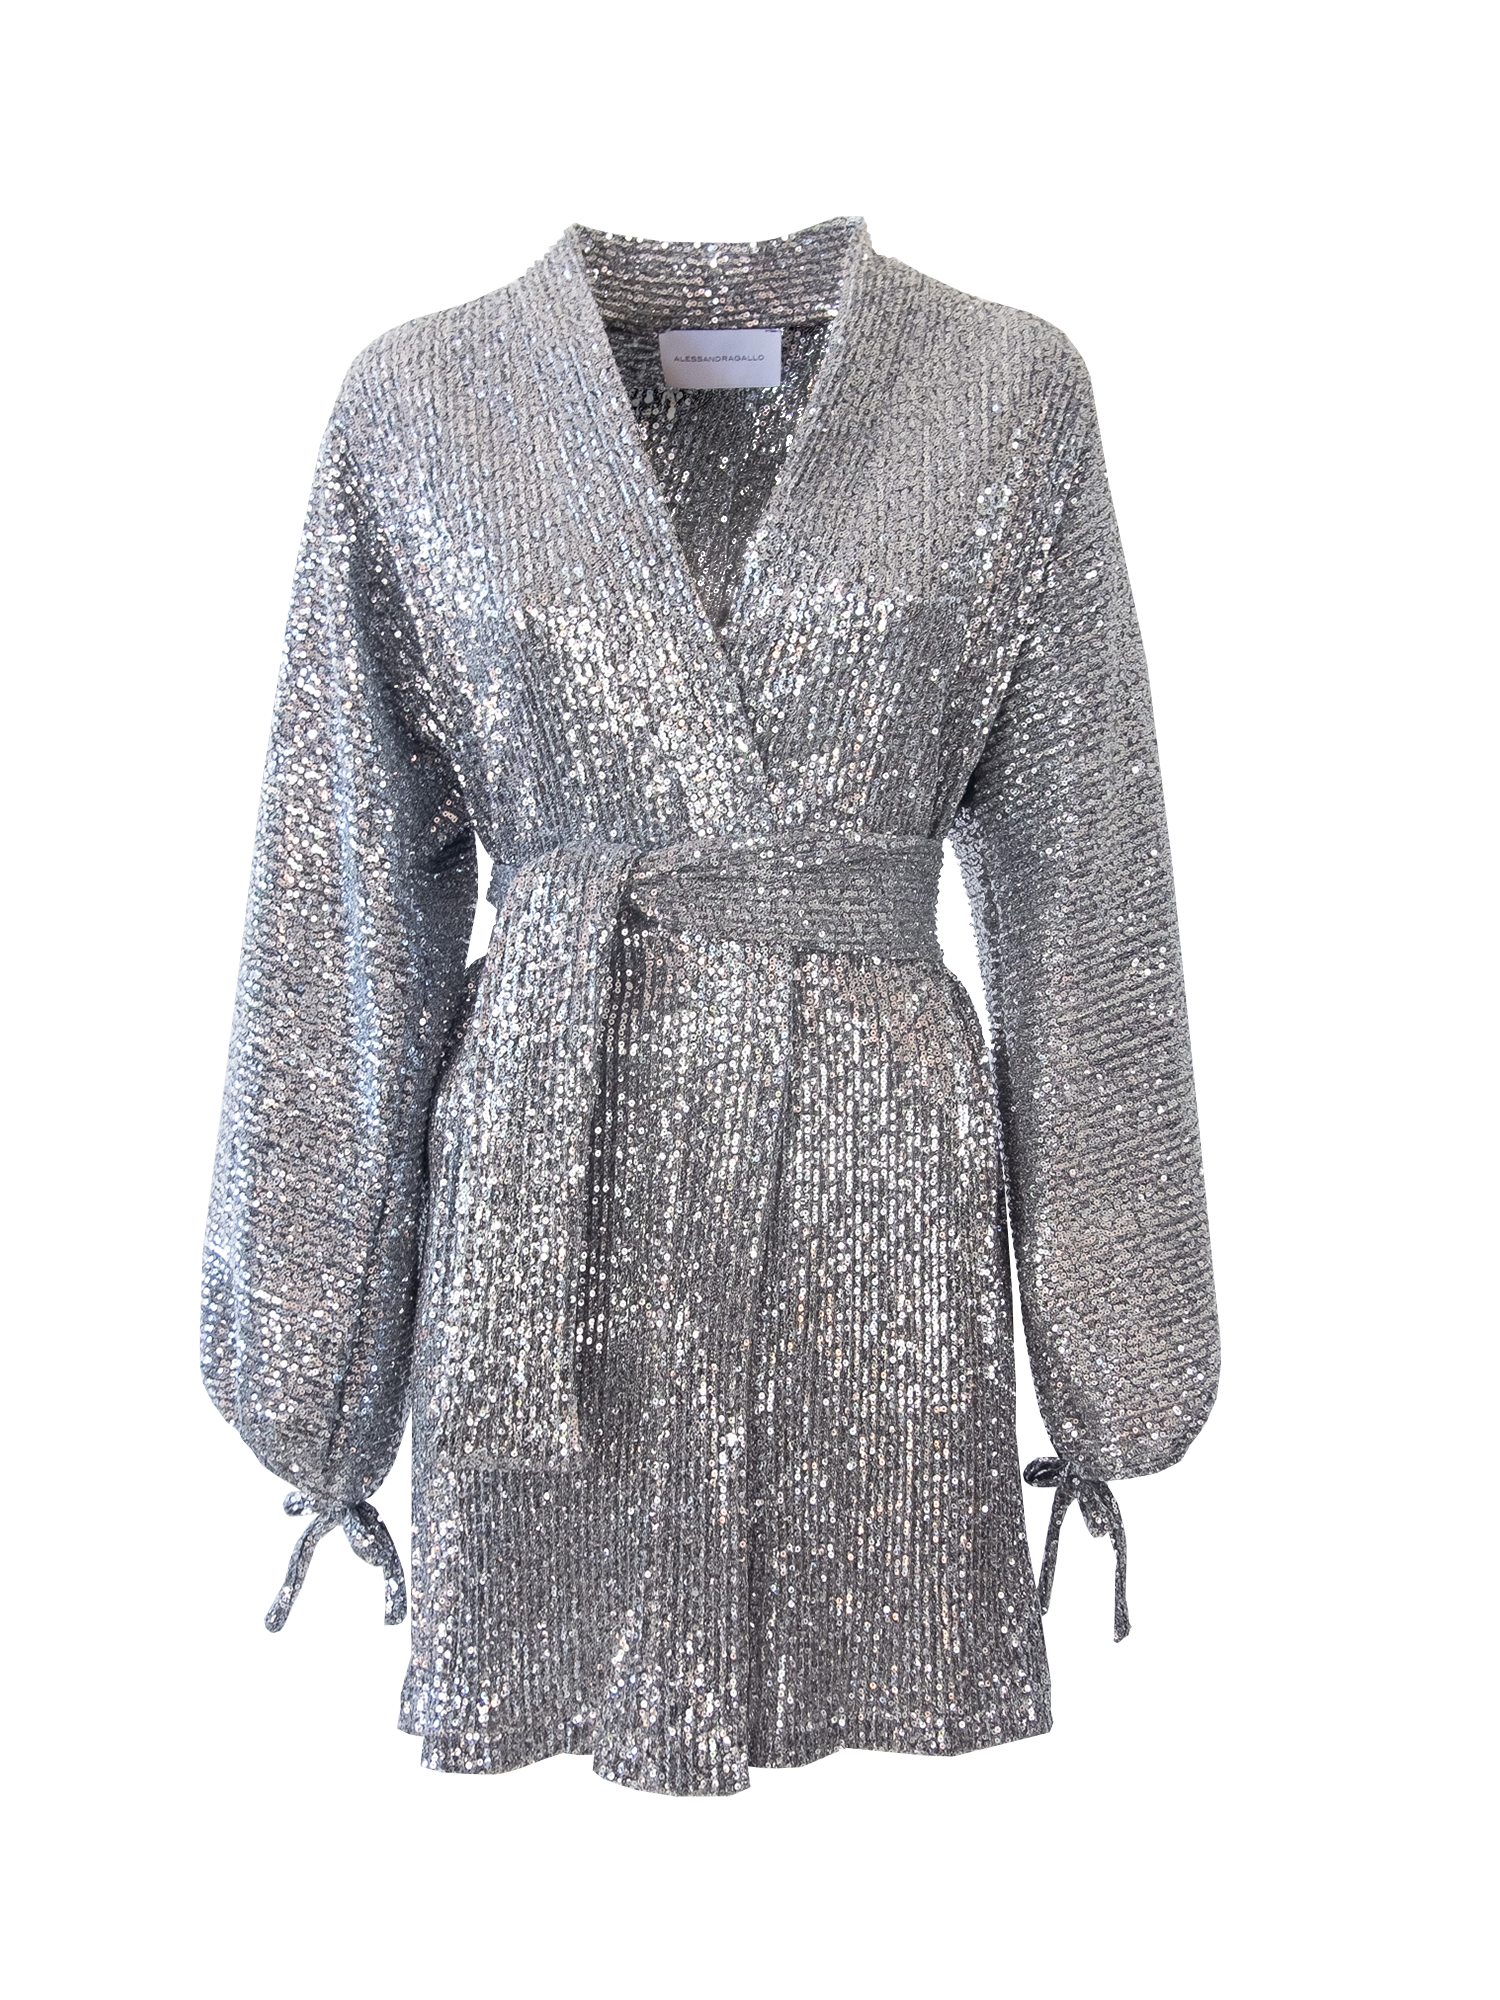 ELVIRA - short sequin dress in silver